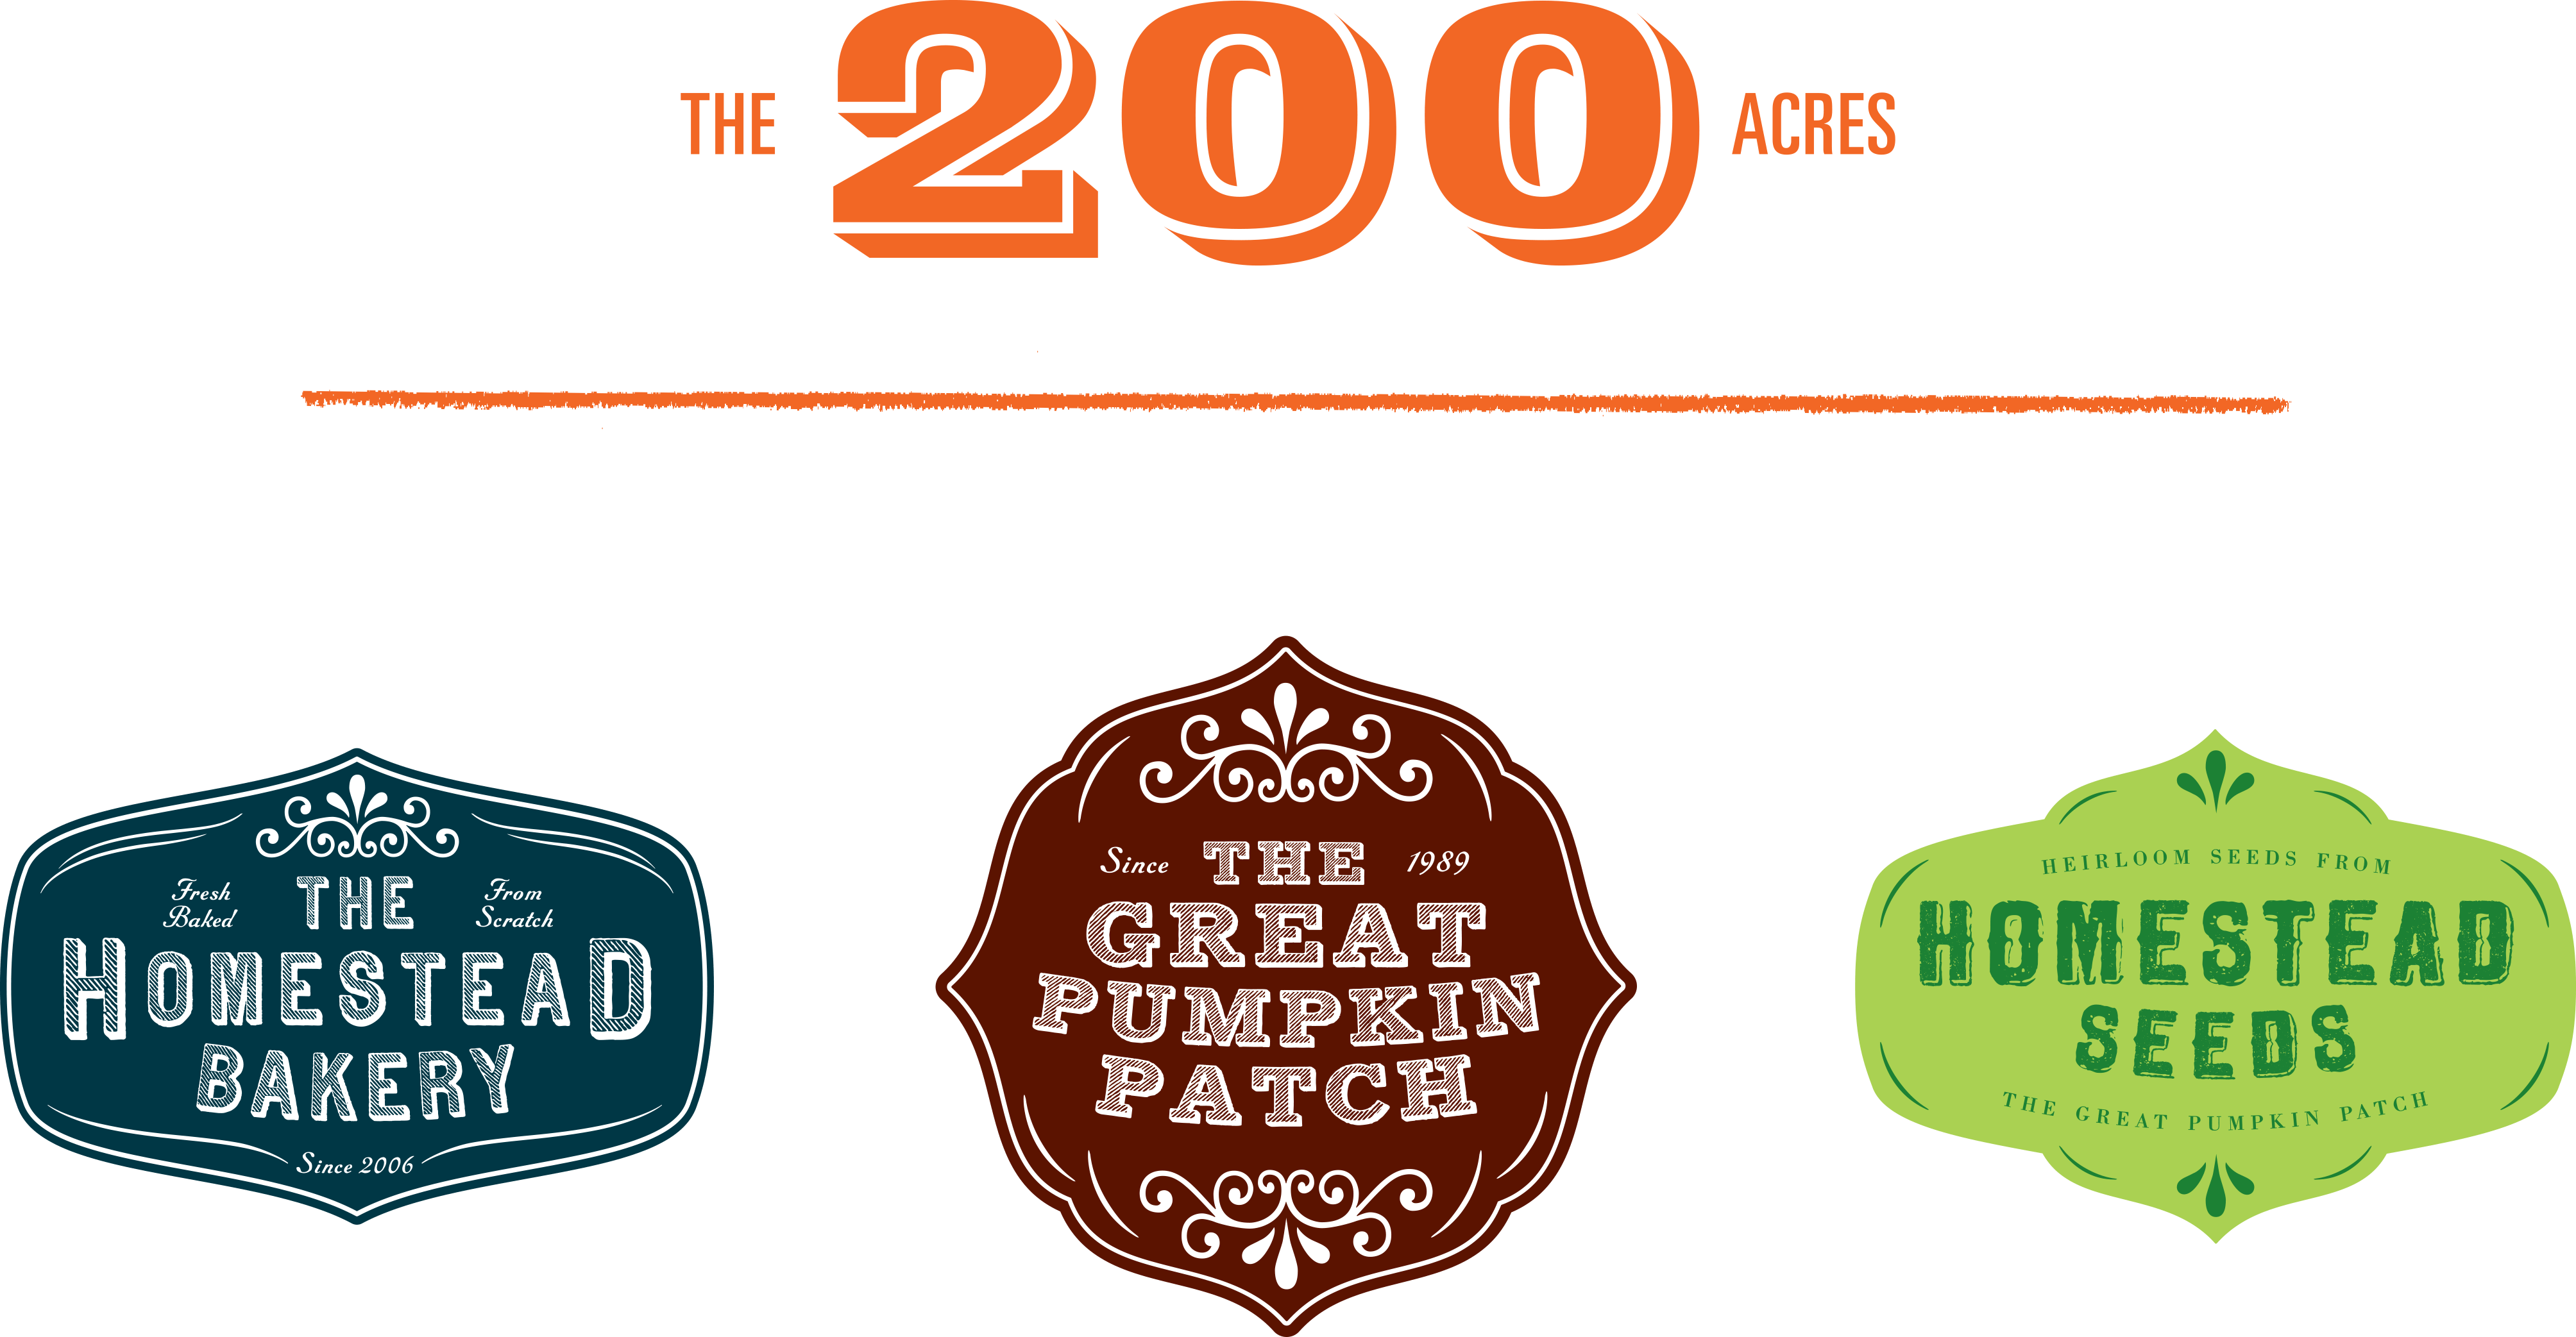 The Great Pumpkin Patch - Arthur, Illinois - Branding